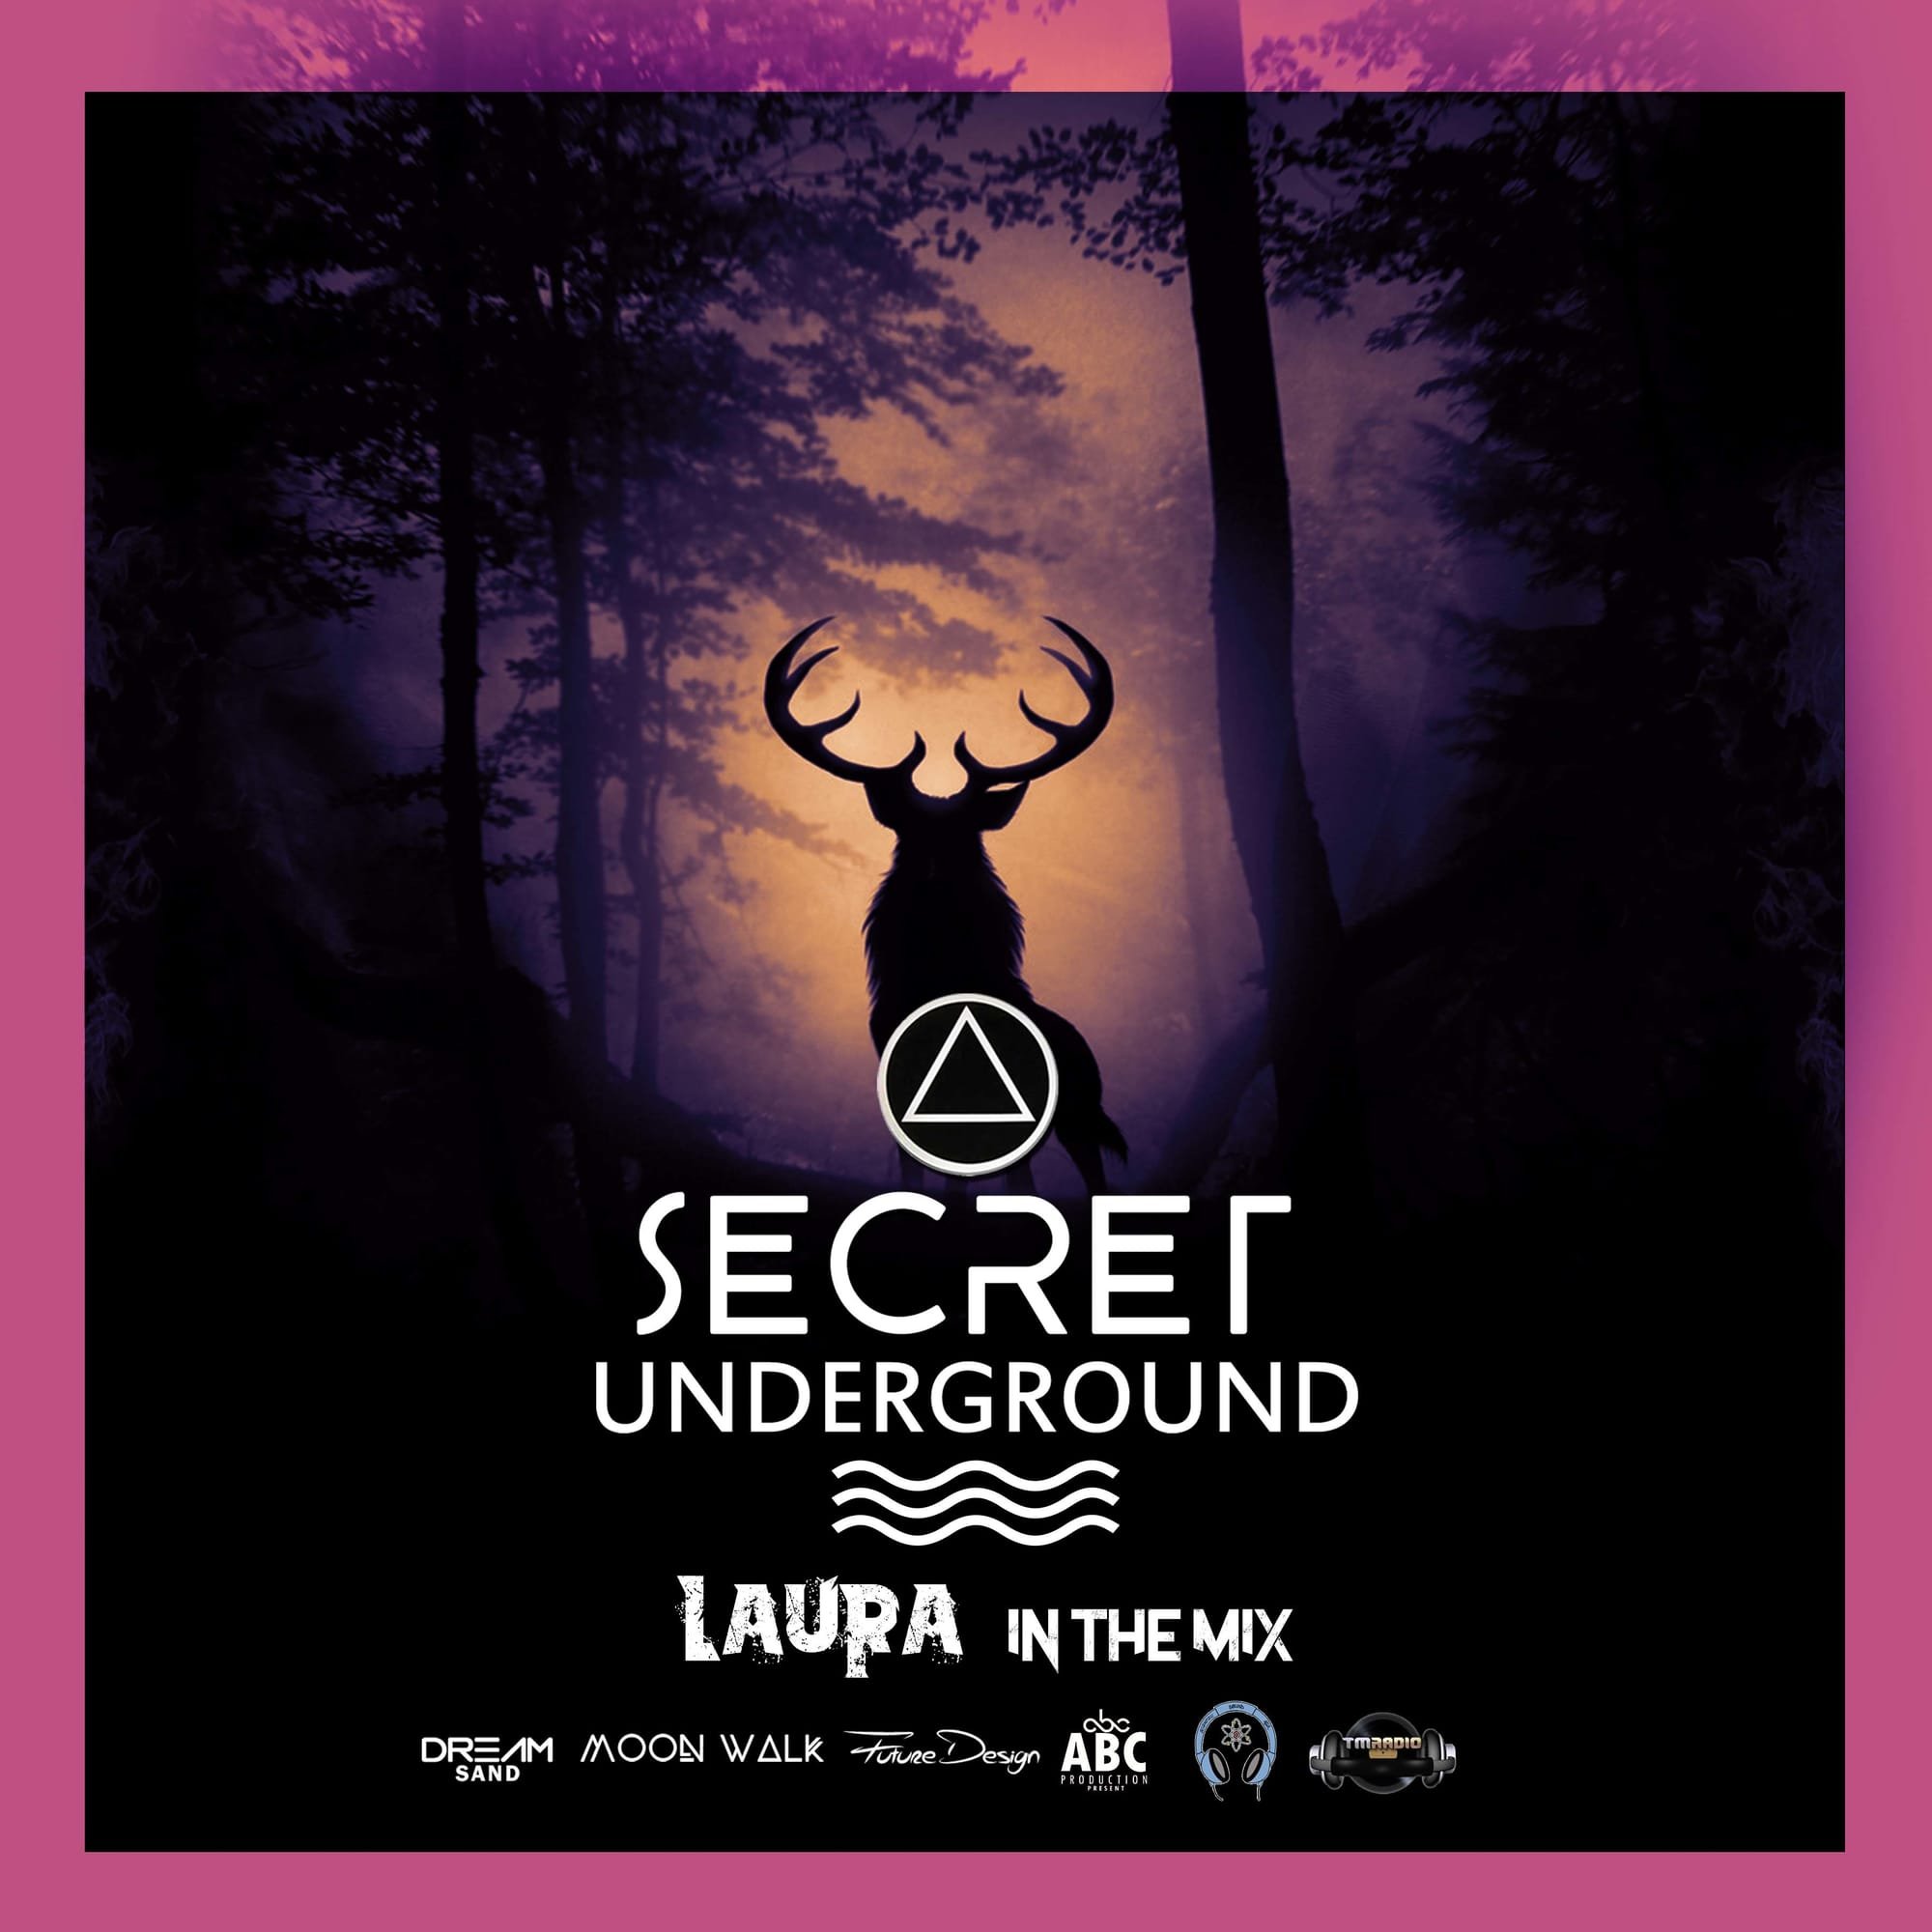 Secret Underground announce playlist and guest DJ Laura.